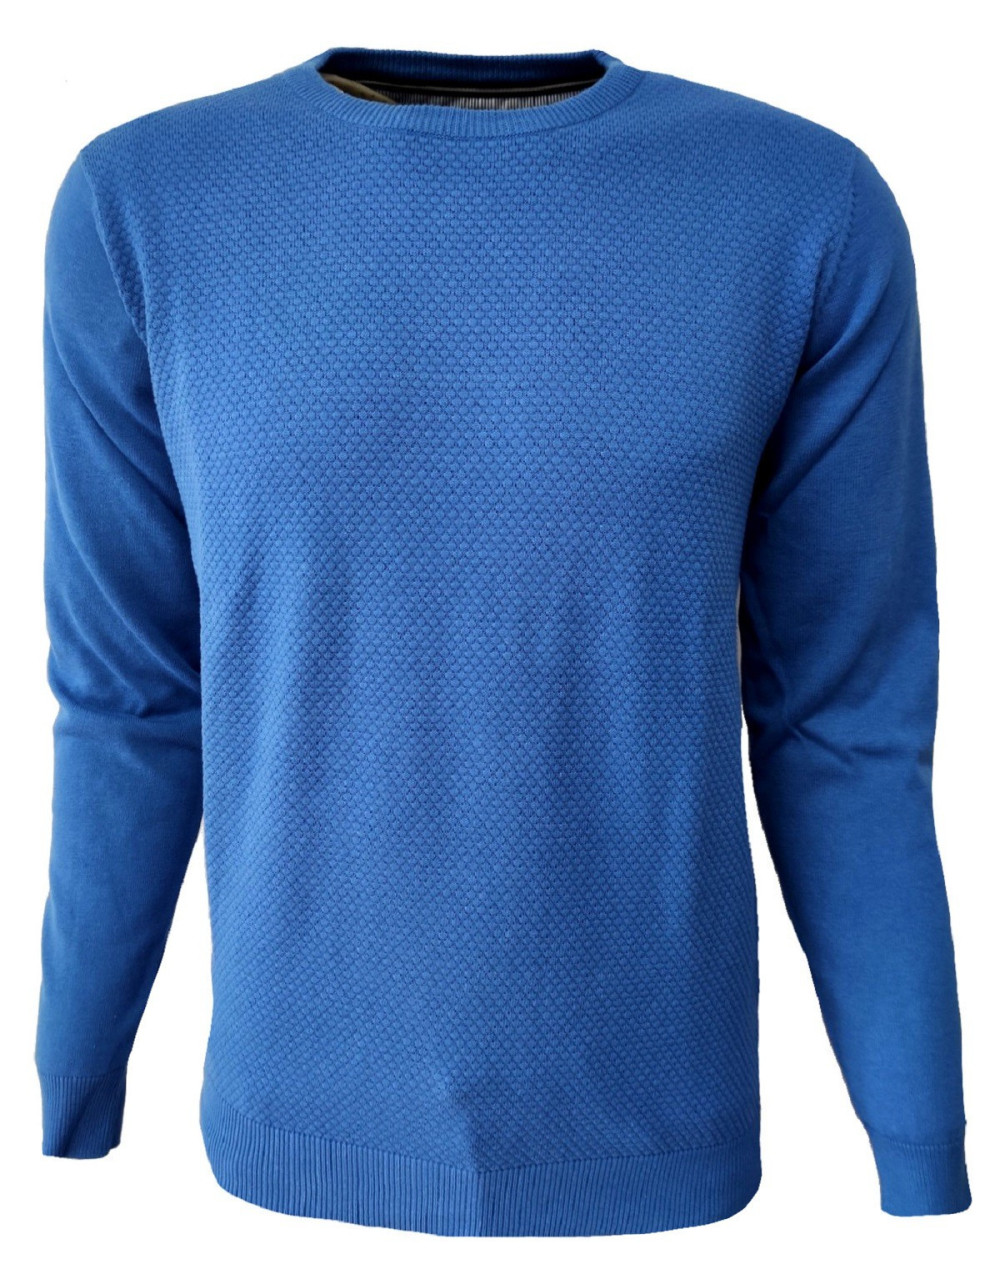 Sweter męski niebieski...